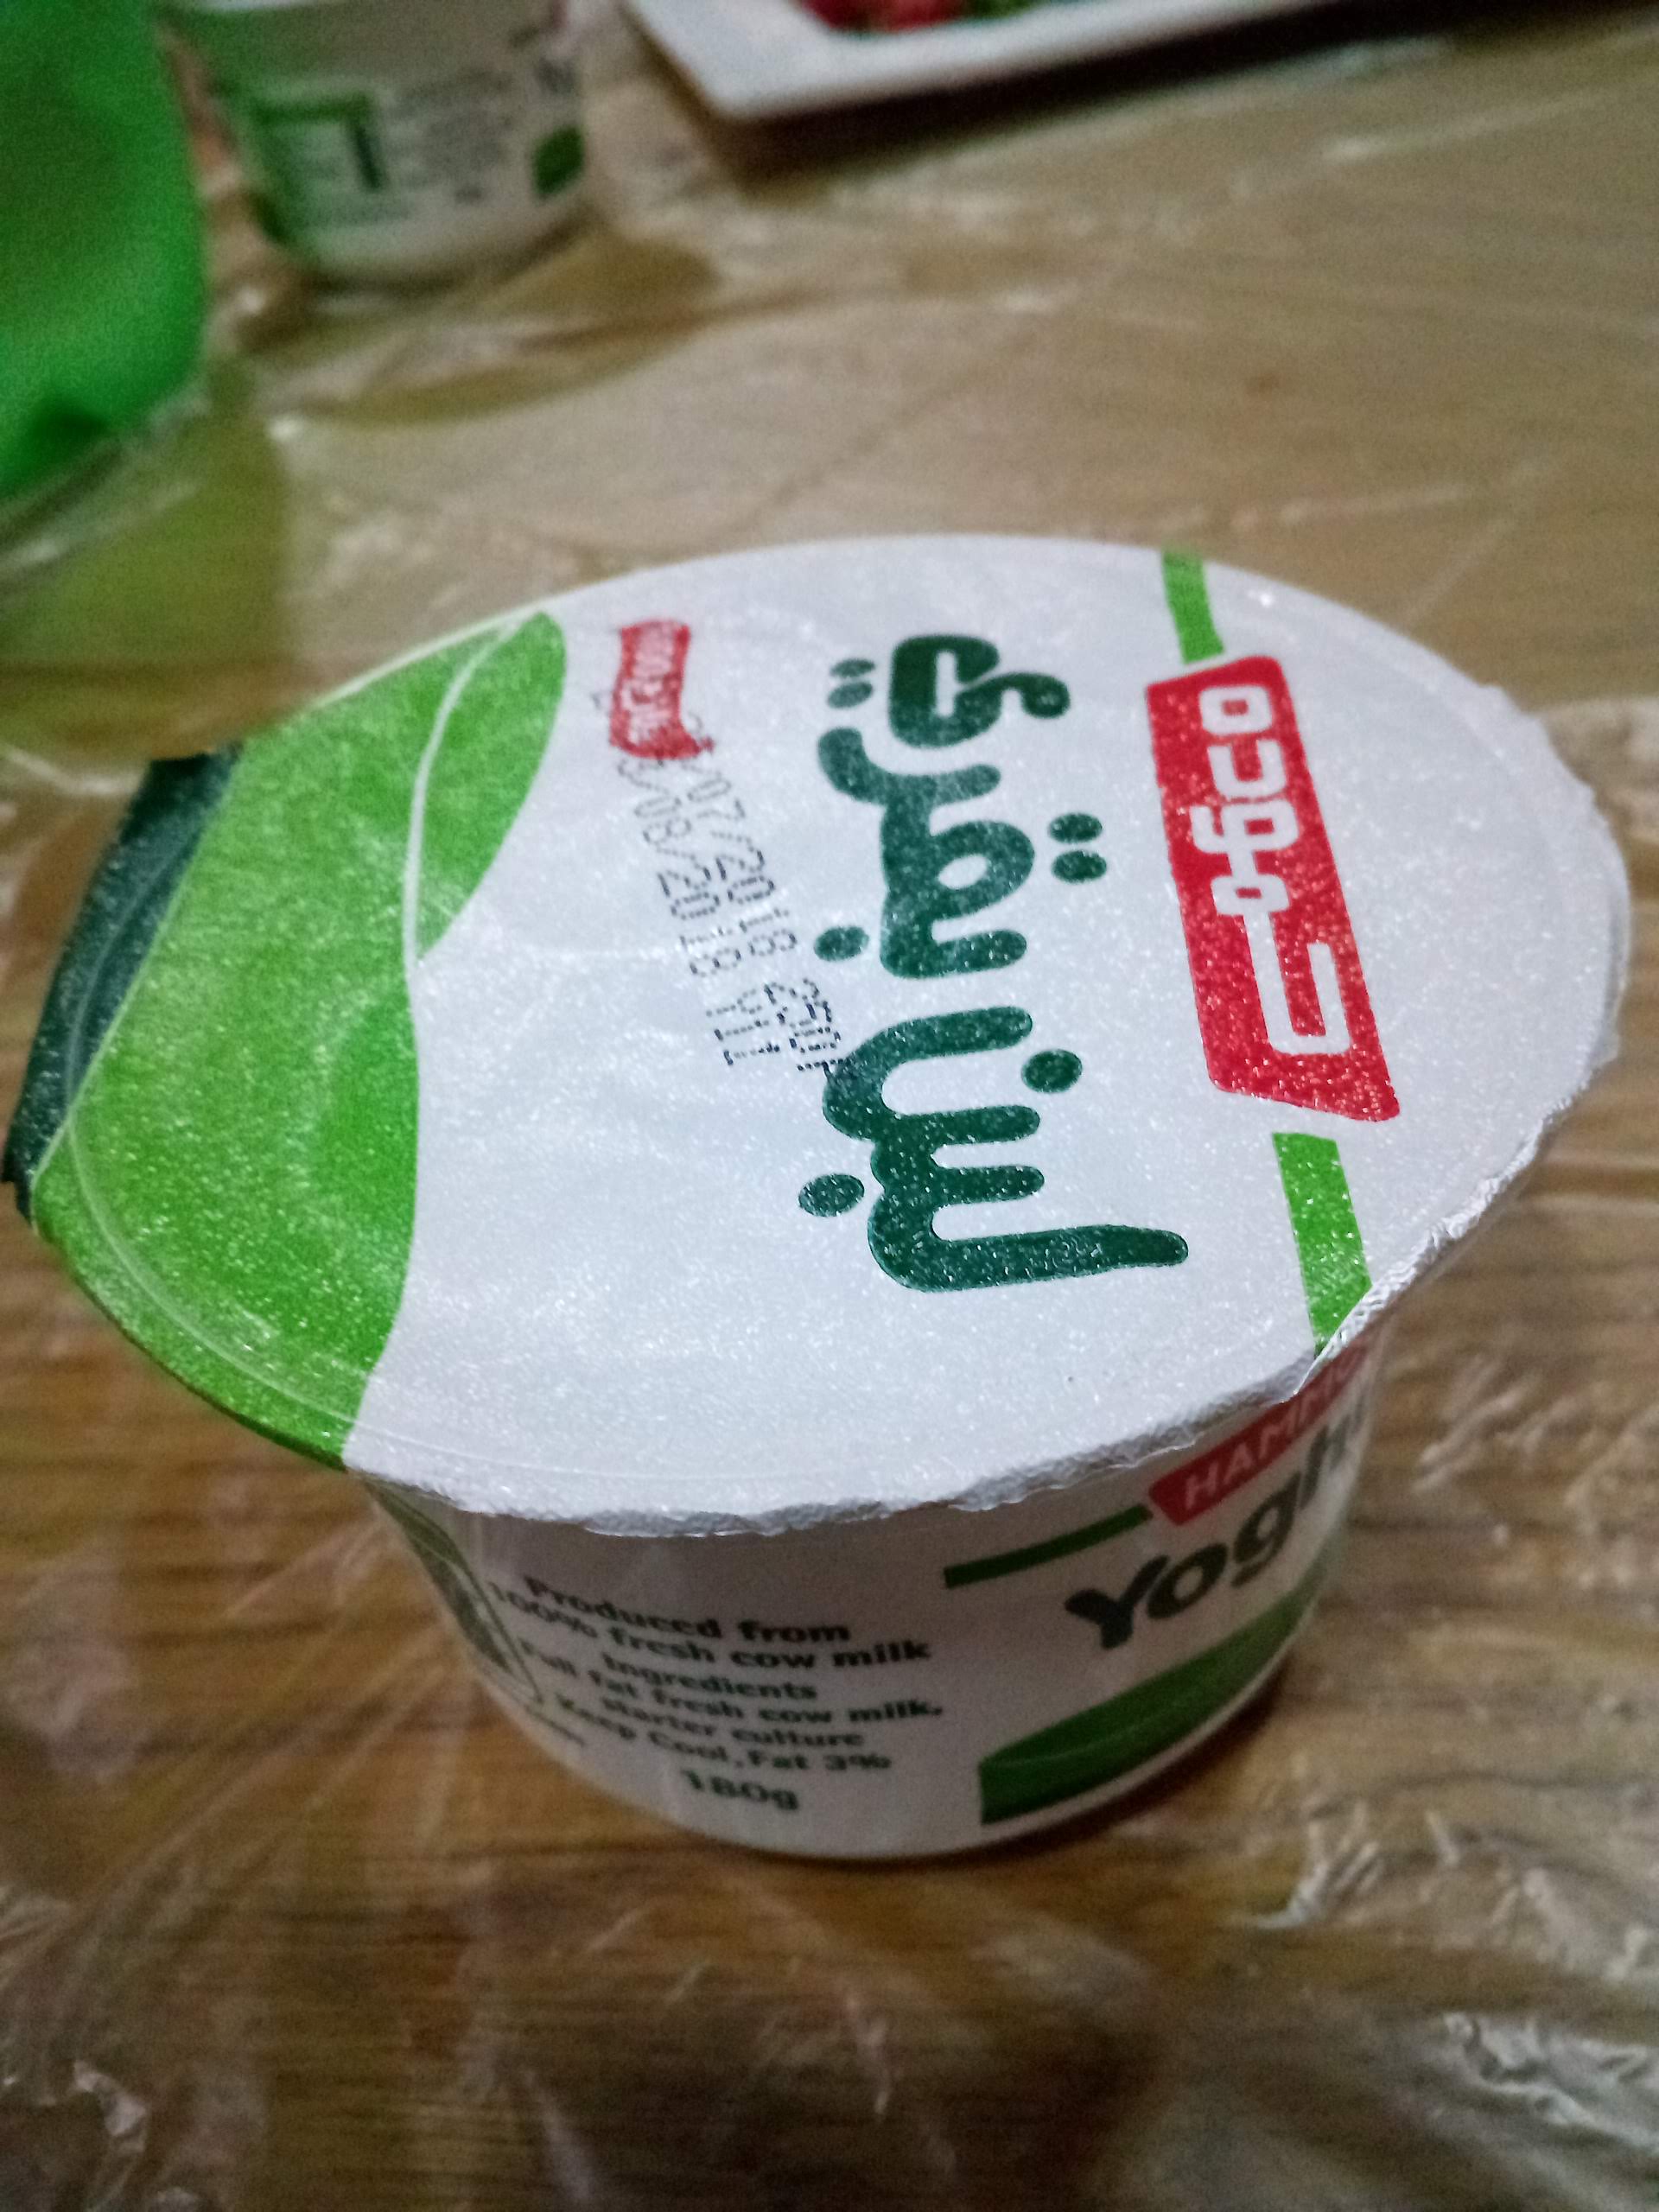 Eating yogurt/Amman, Jordan